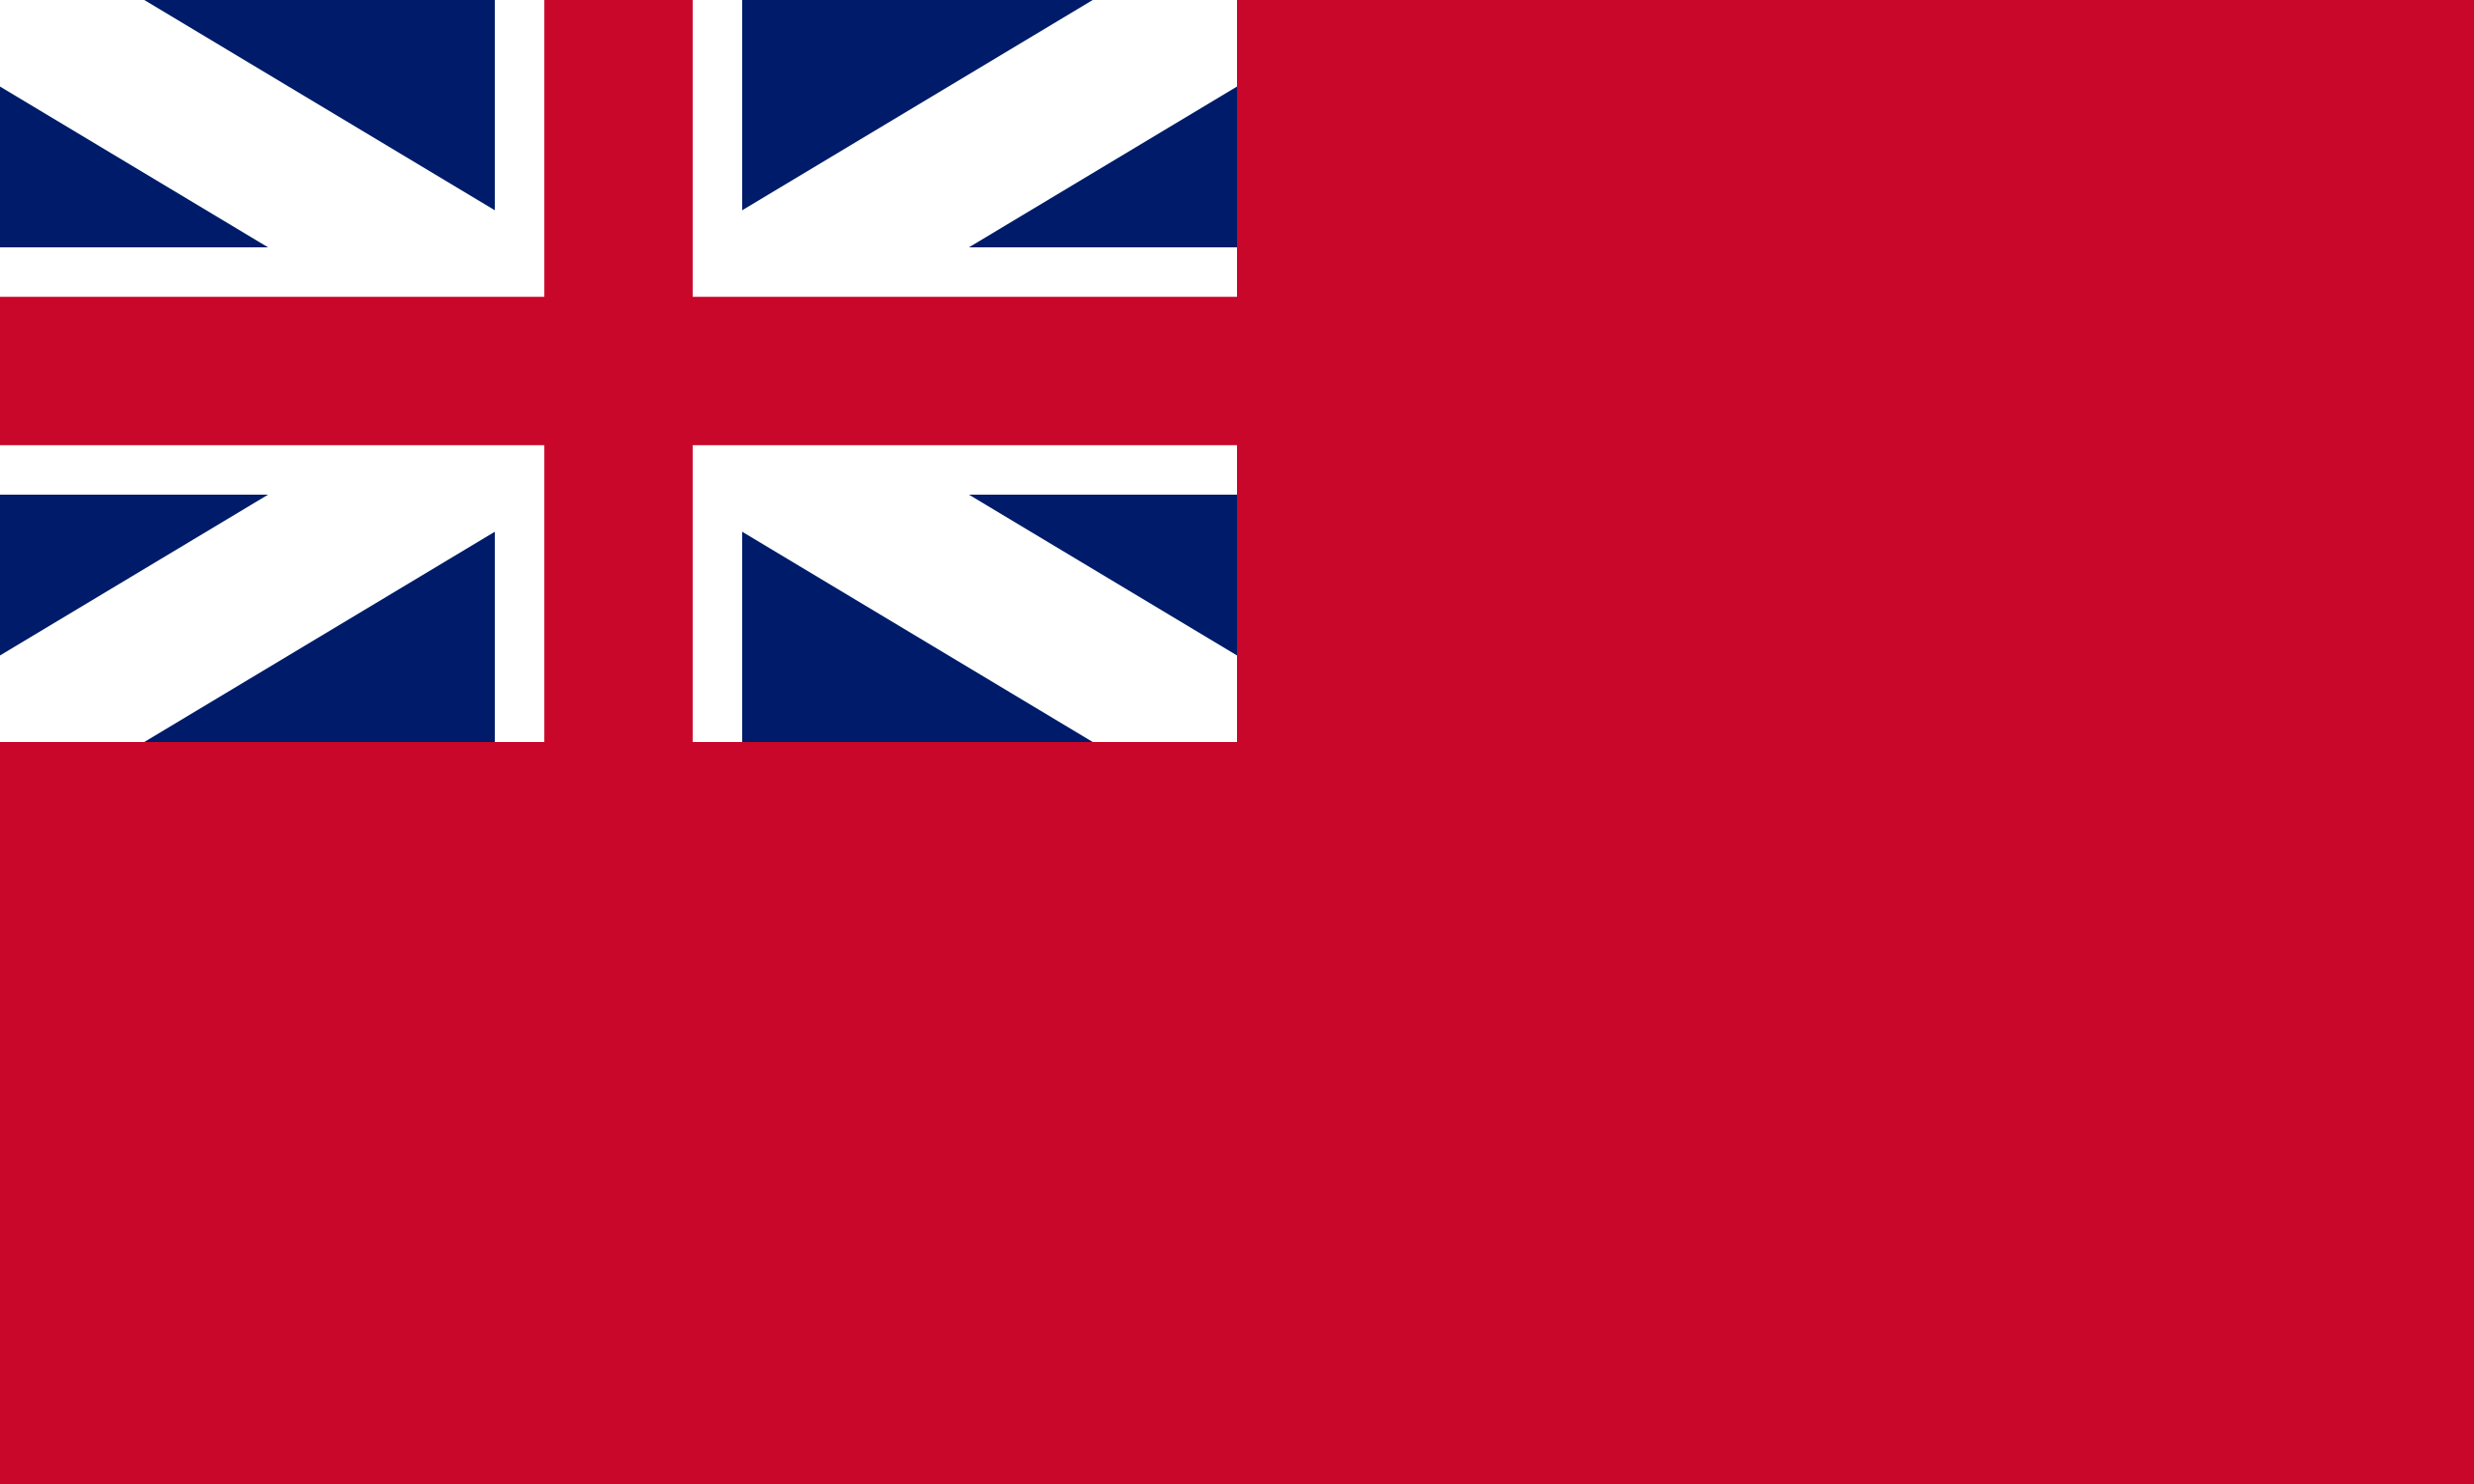 British Red Ensign.